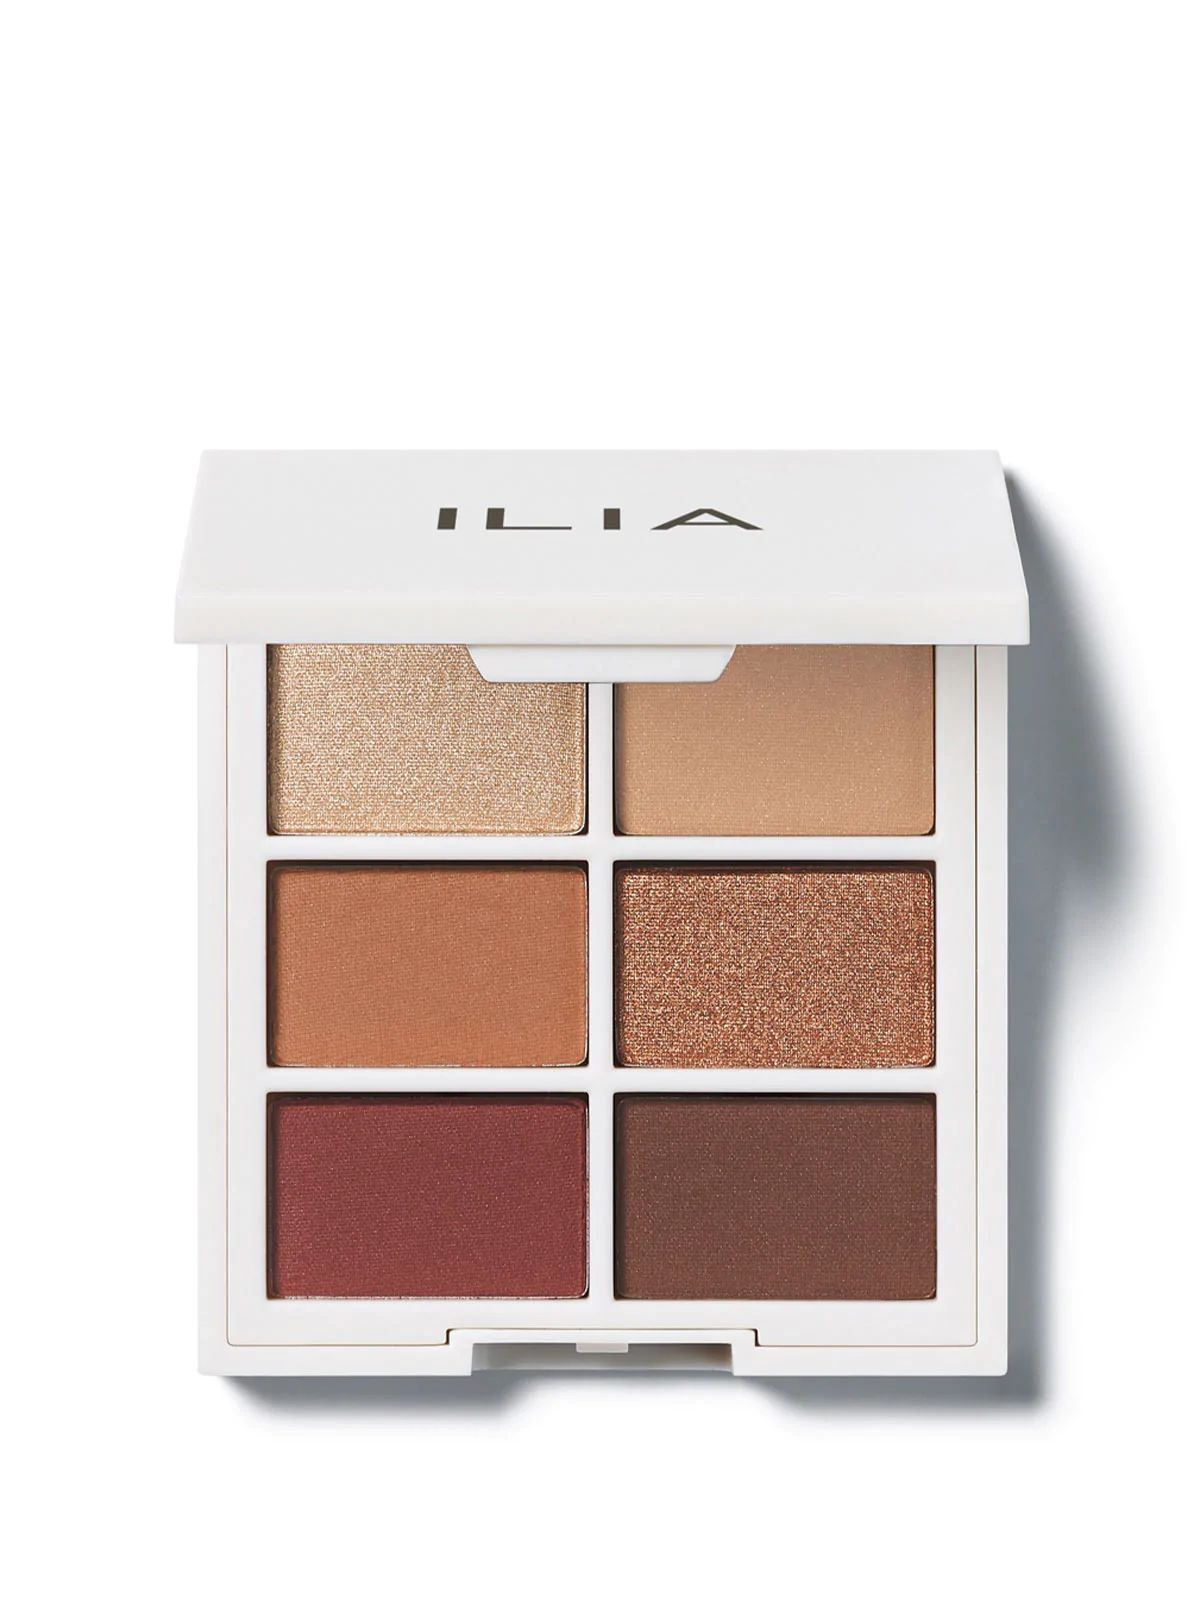 The Necessary Eyeshadow Palette in Warm Nude | ILIA Beauty | ILIA Beauty